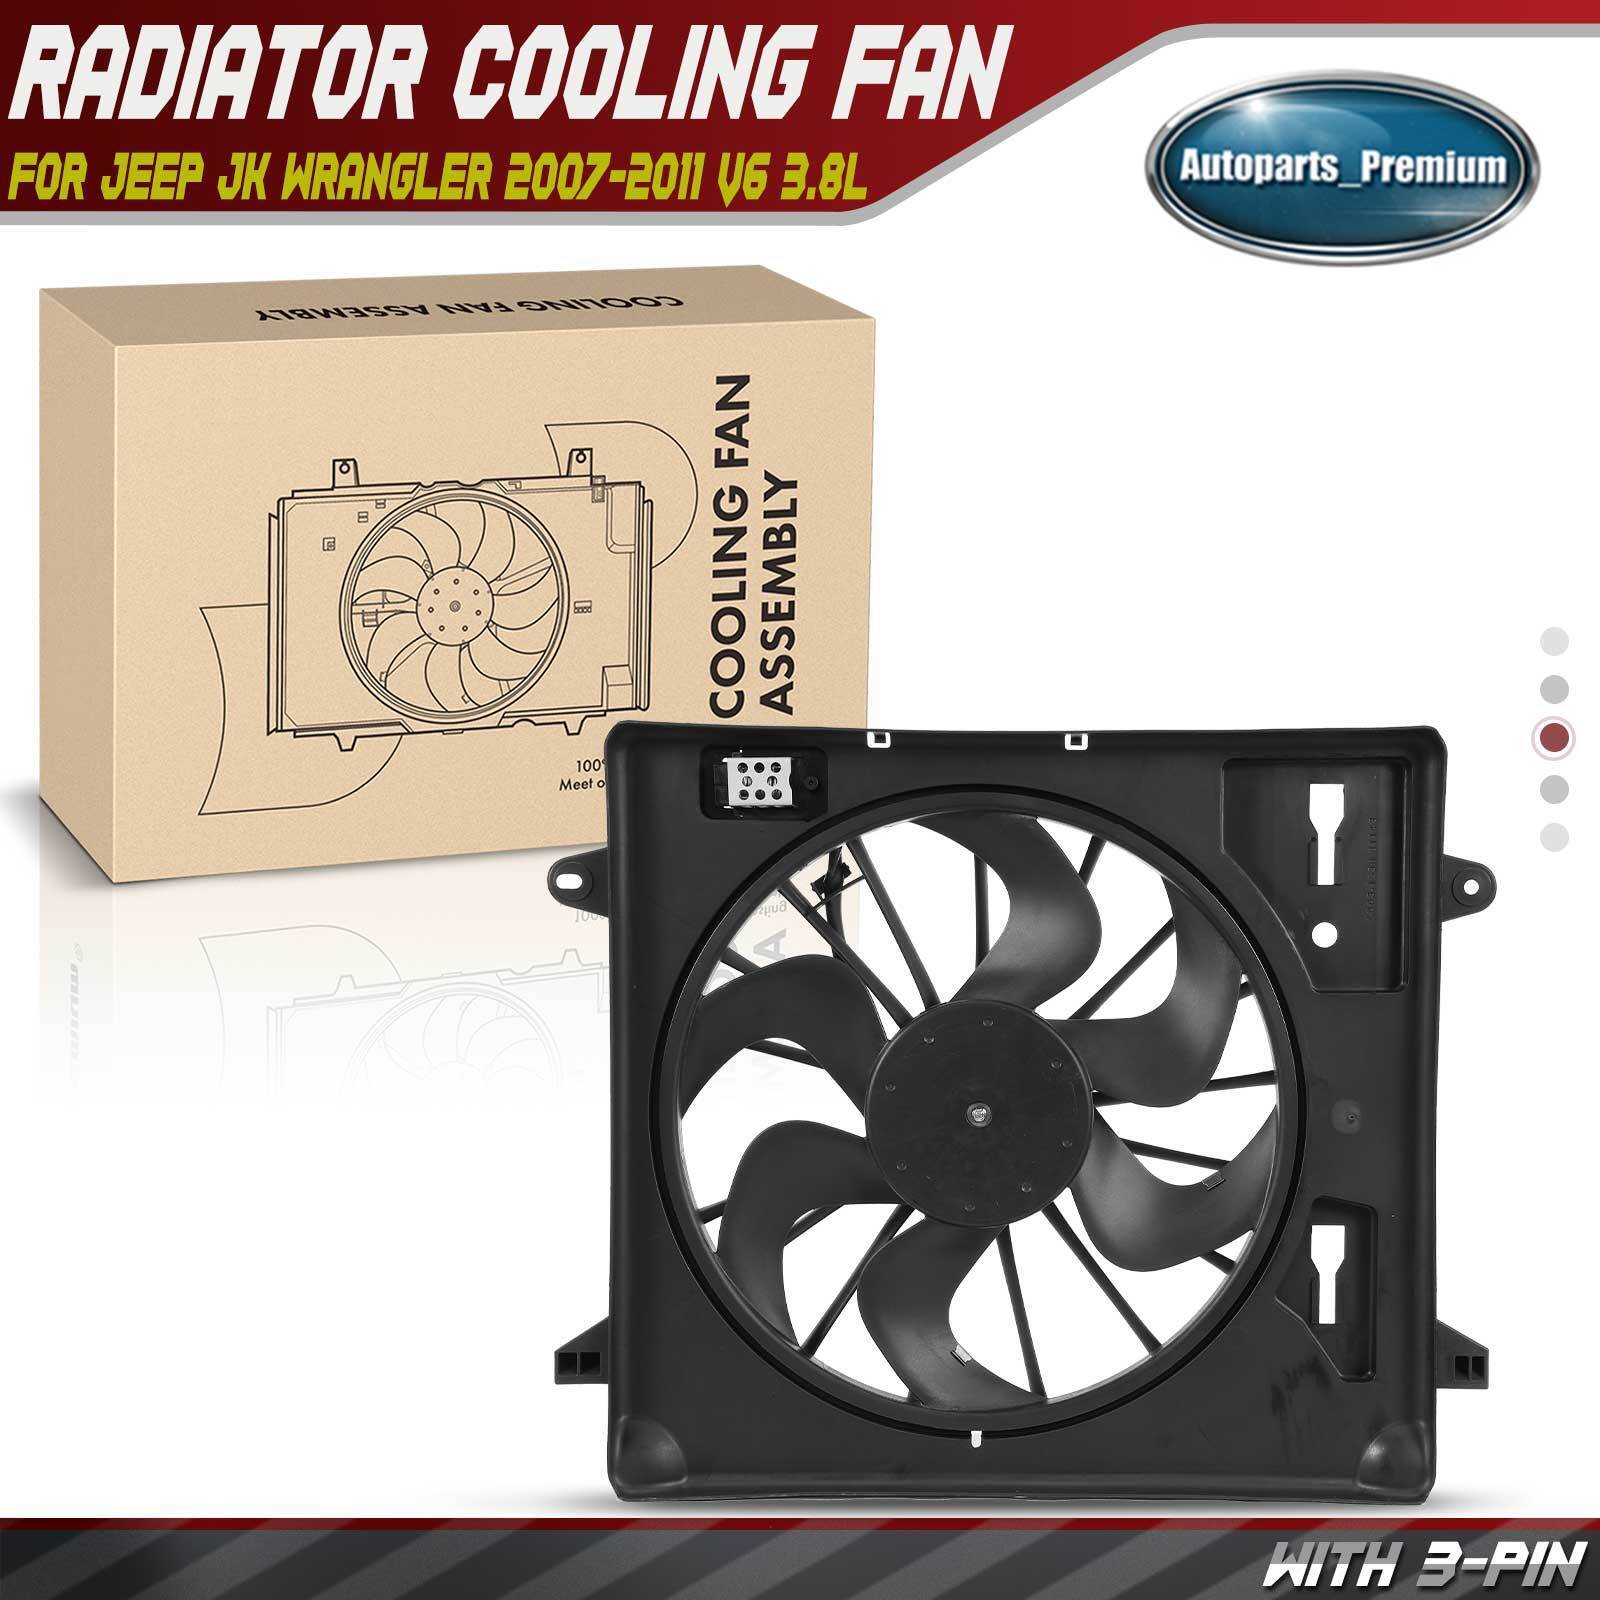 Radiator Cooling Fan Assembly with Shroud for Jeep JK Wrangler 2007-2011 V6 3.8L